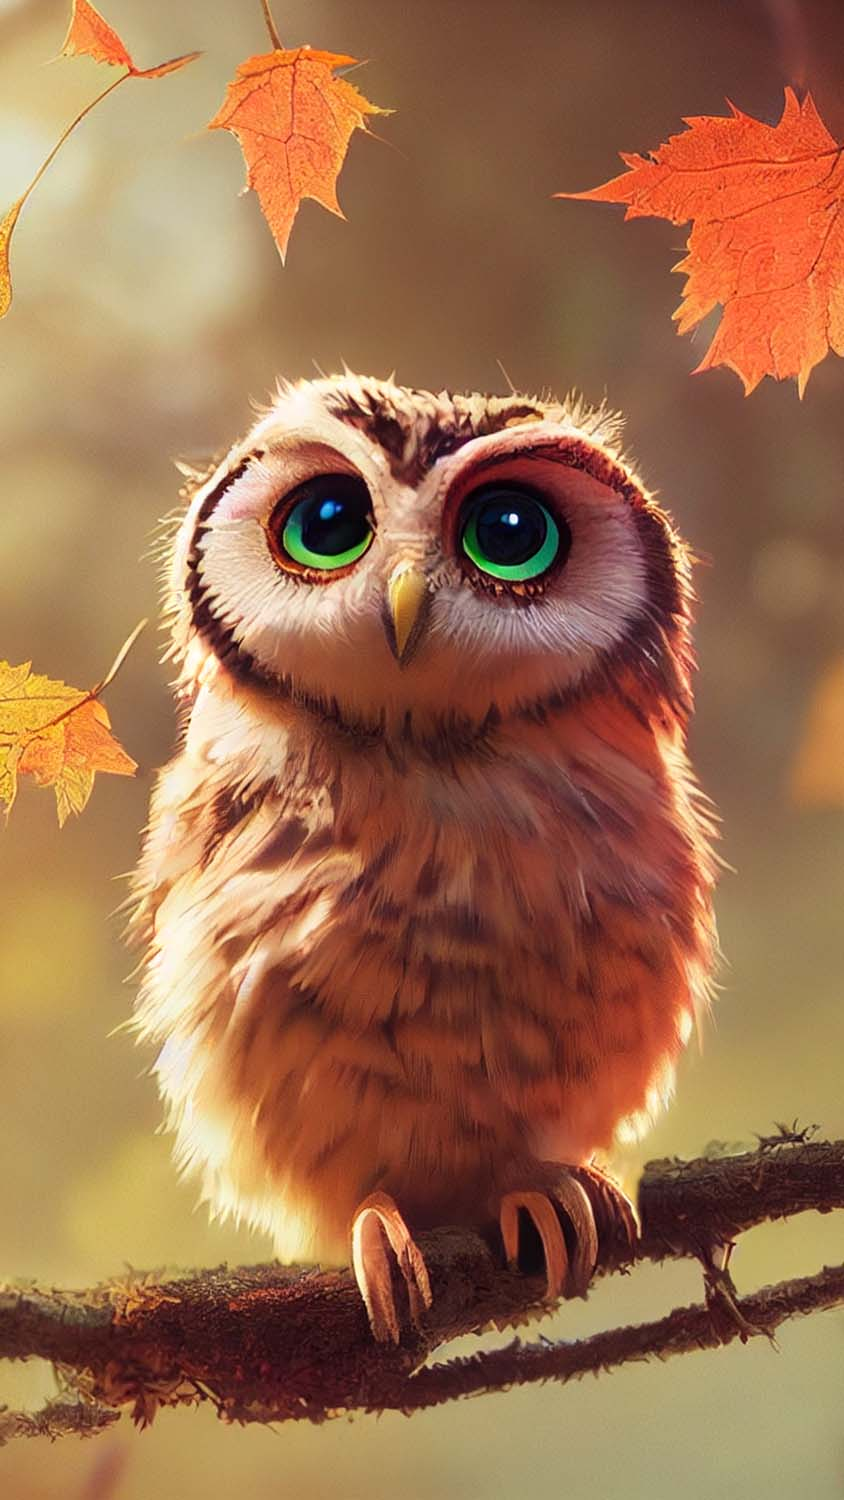 Autumn Owl IPhone Wallpaper HD  IPhone Wallpapers